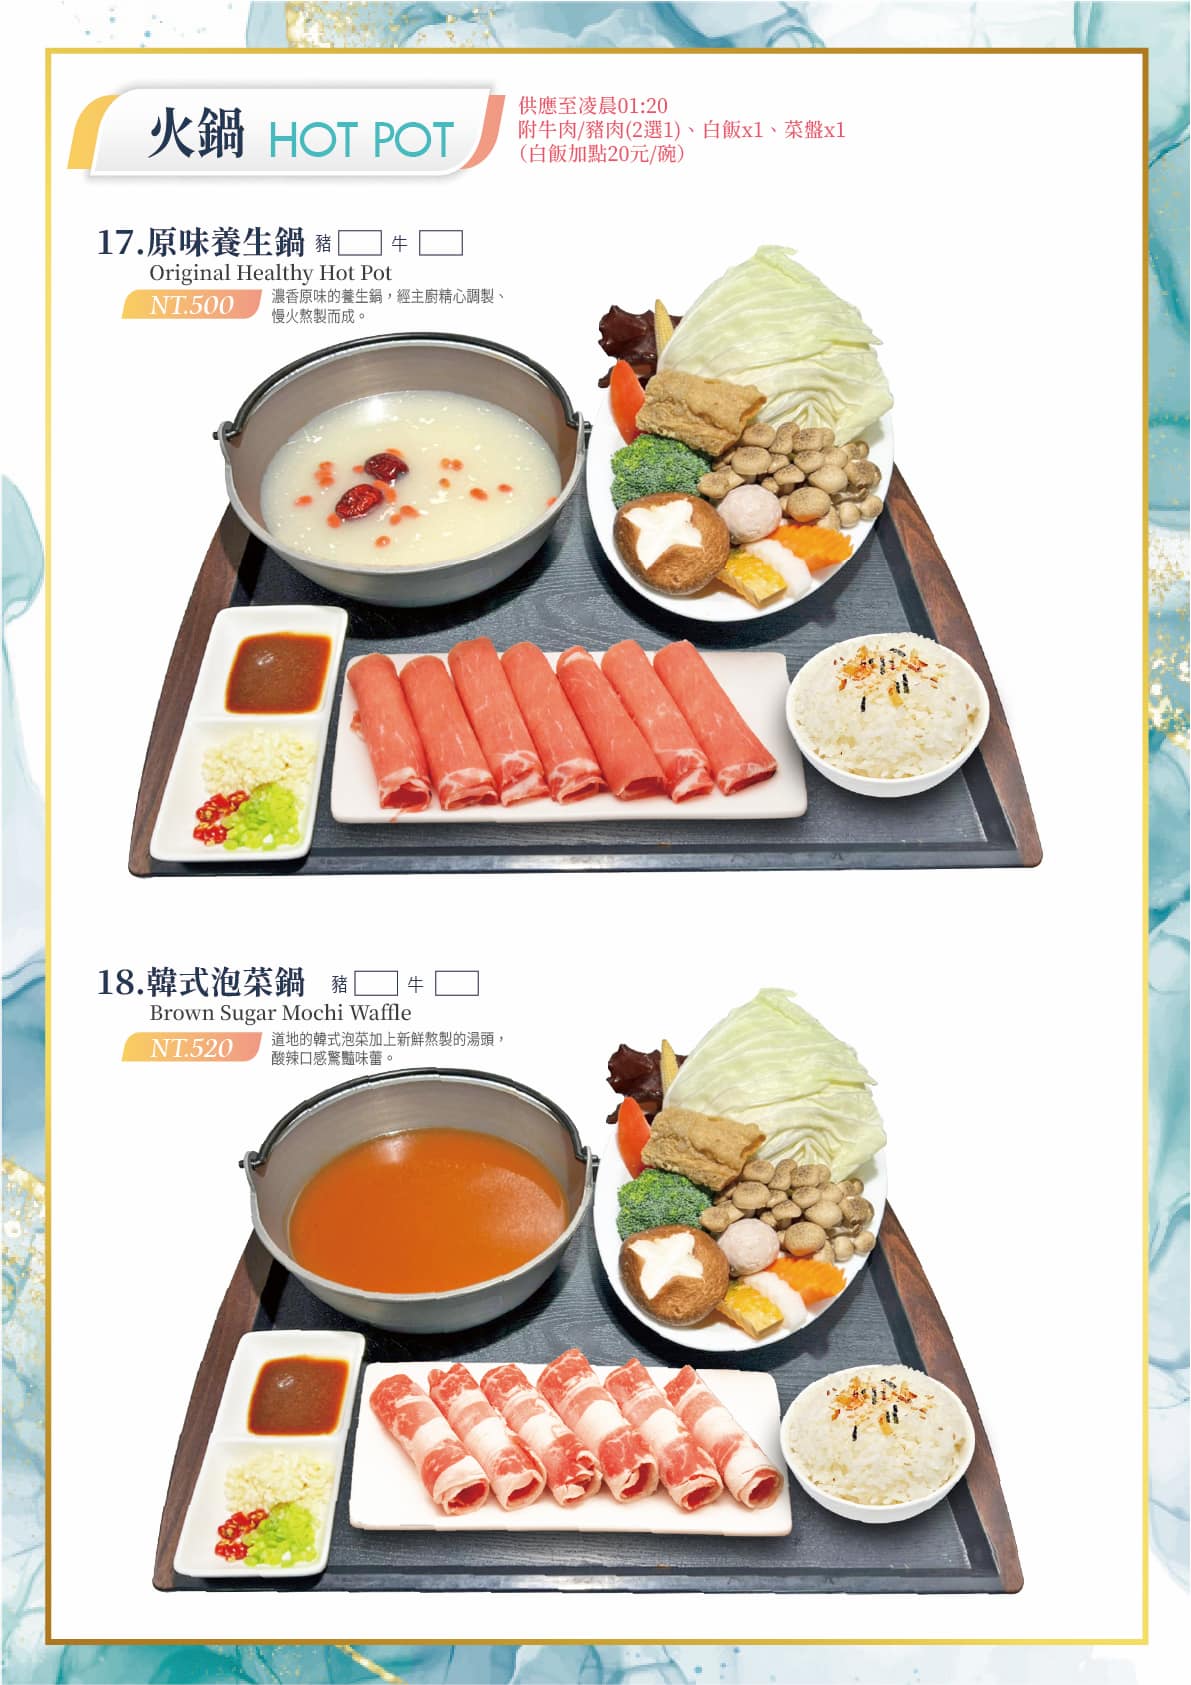 幻境 Fantasy Cafe 裝置藝術咖啡廳 13 - Travel of Rice 小米遊記